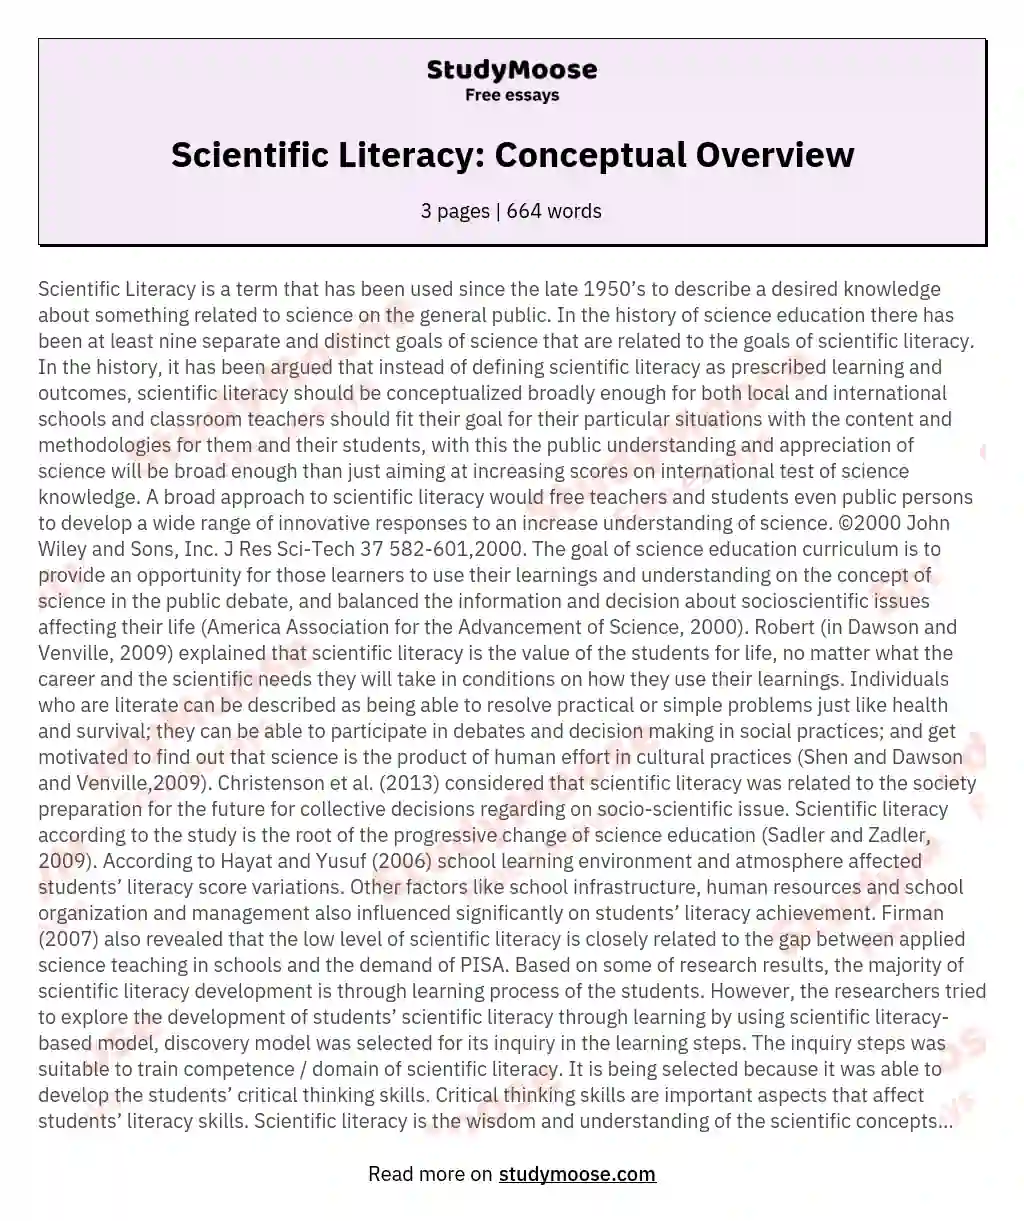 Scientific Literacy: Conceptual Overview essay